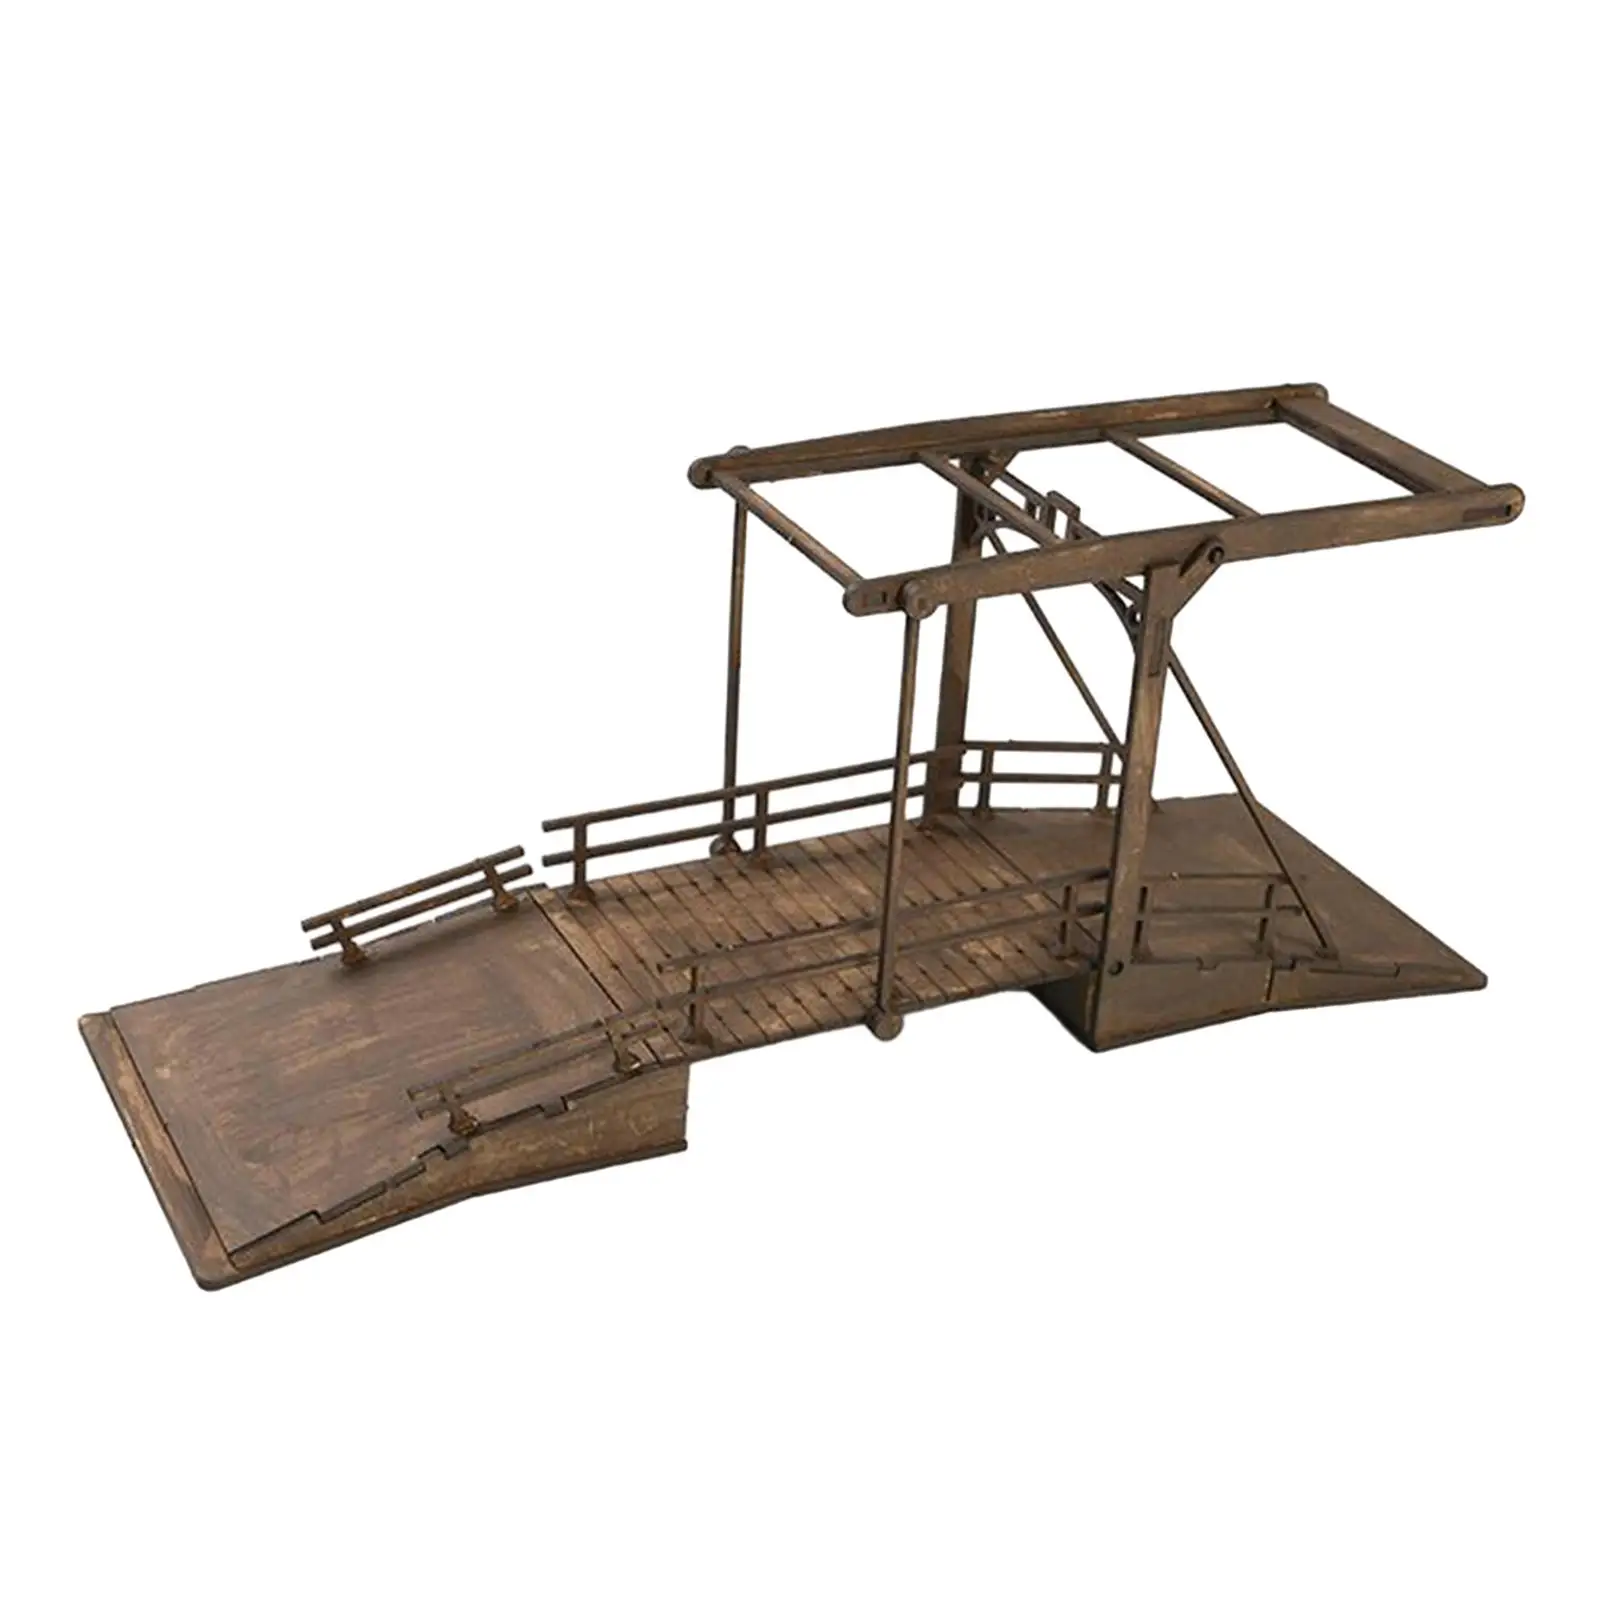 1/72 Scale 4D Wooden Bridge Model Reconnaissance Vehicles DIY Handmade for Table Scene Boys Tabletop Decor Display Party Favors